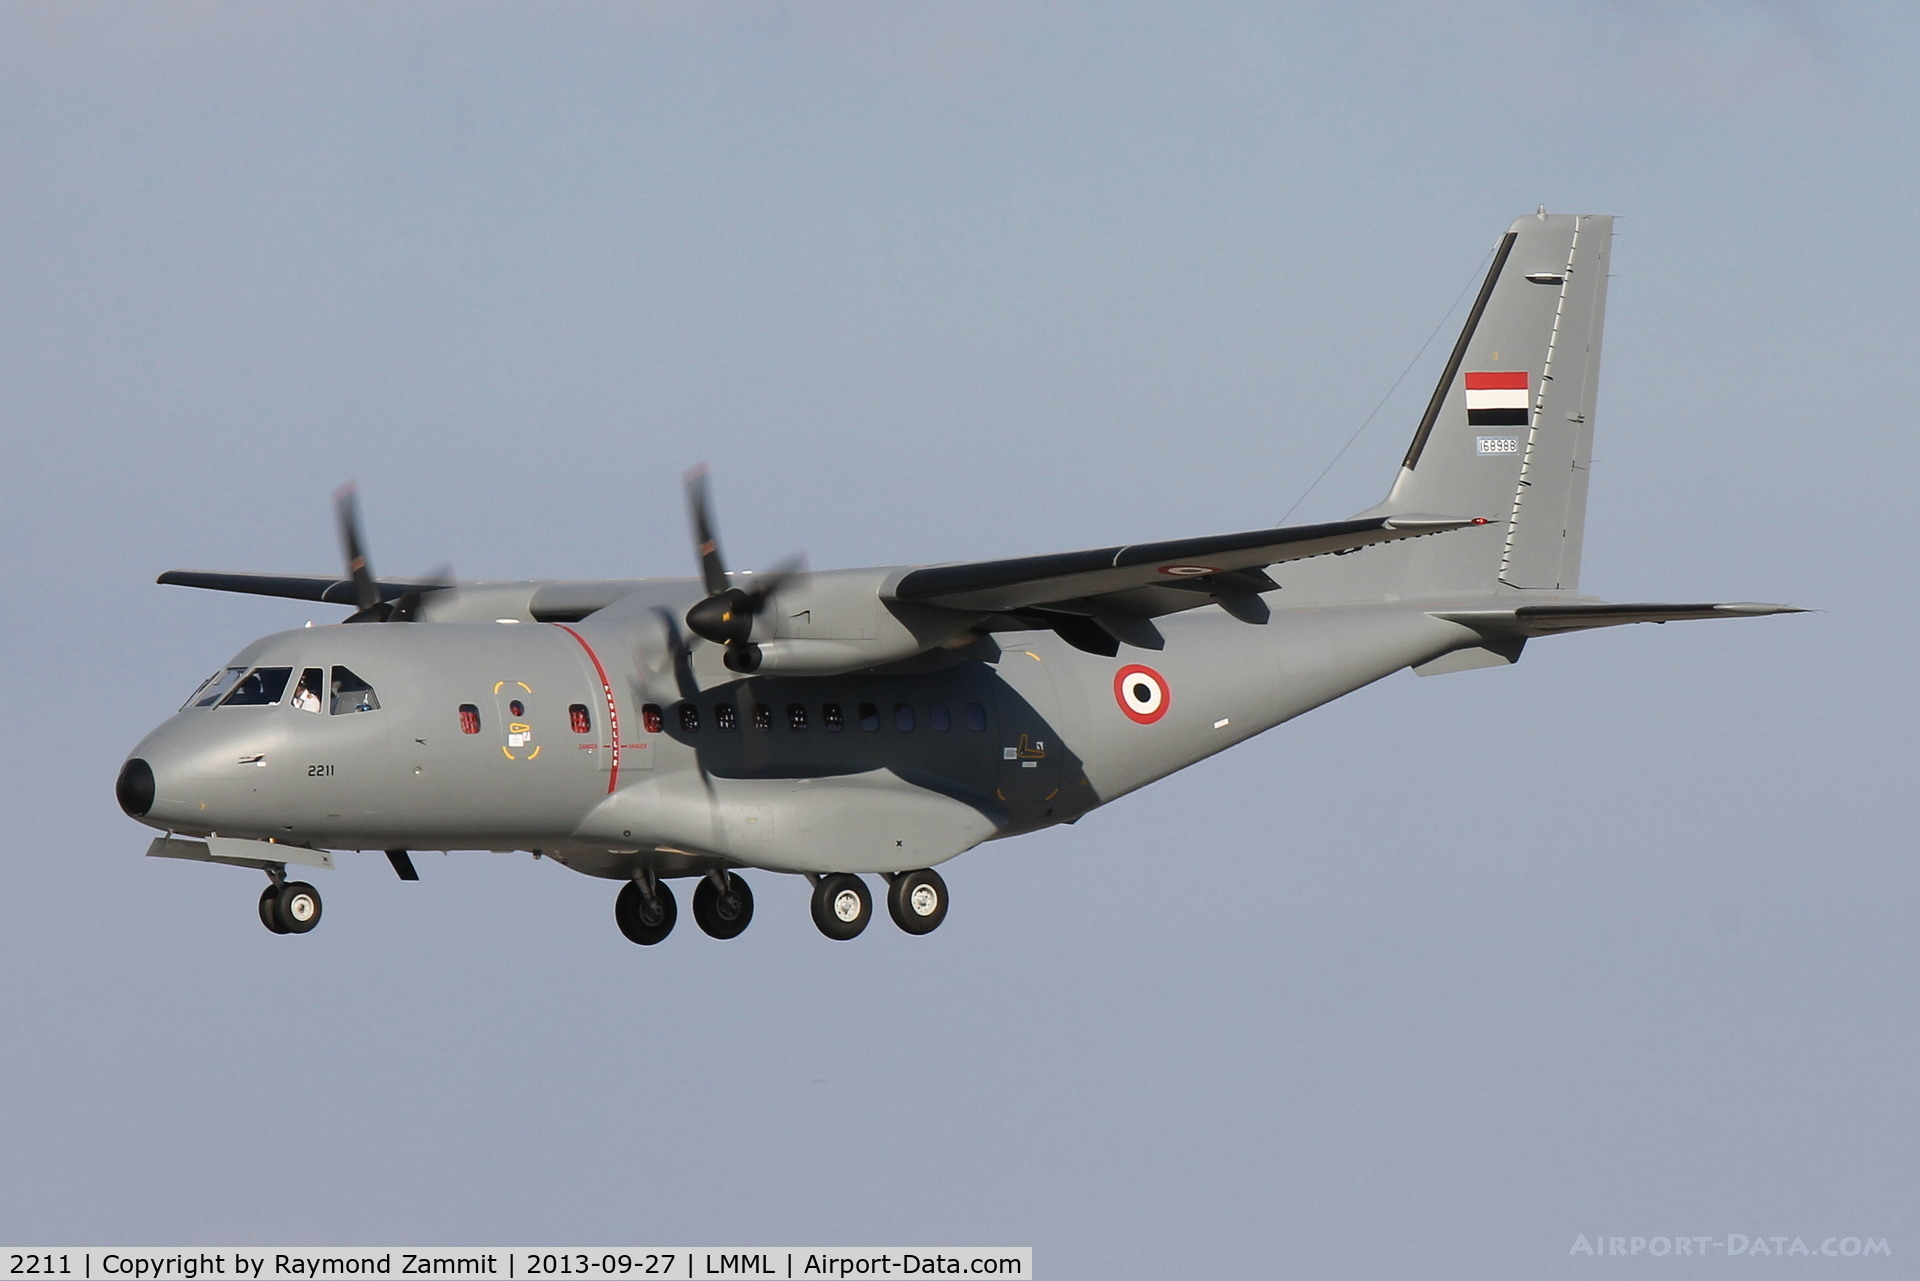 2211, 2012 CASA CN-235-300M C/N C188, CN235 2211 Yemen Air Force